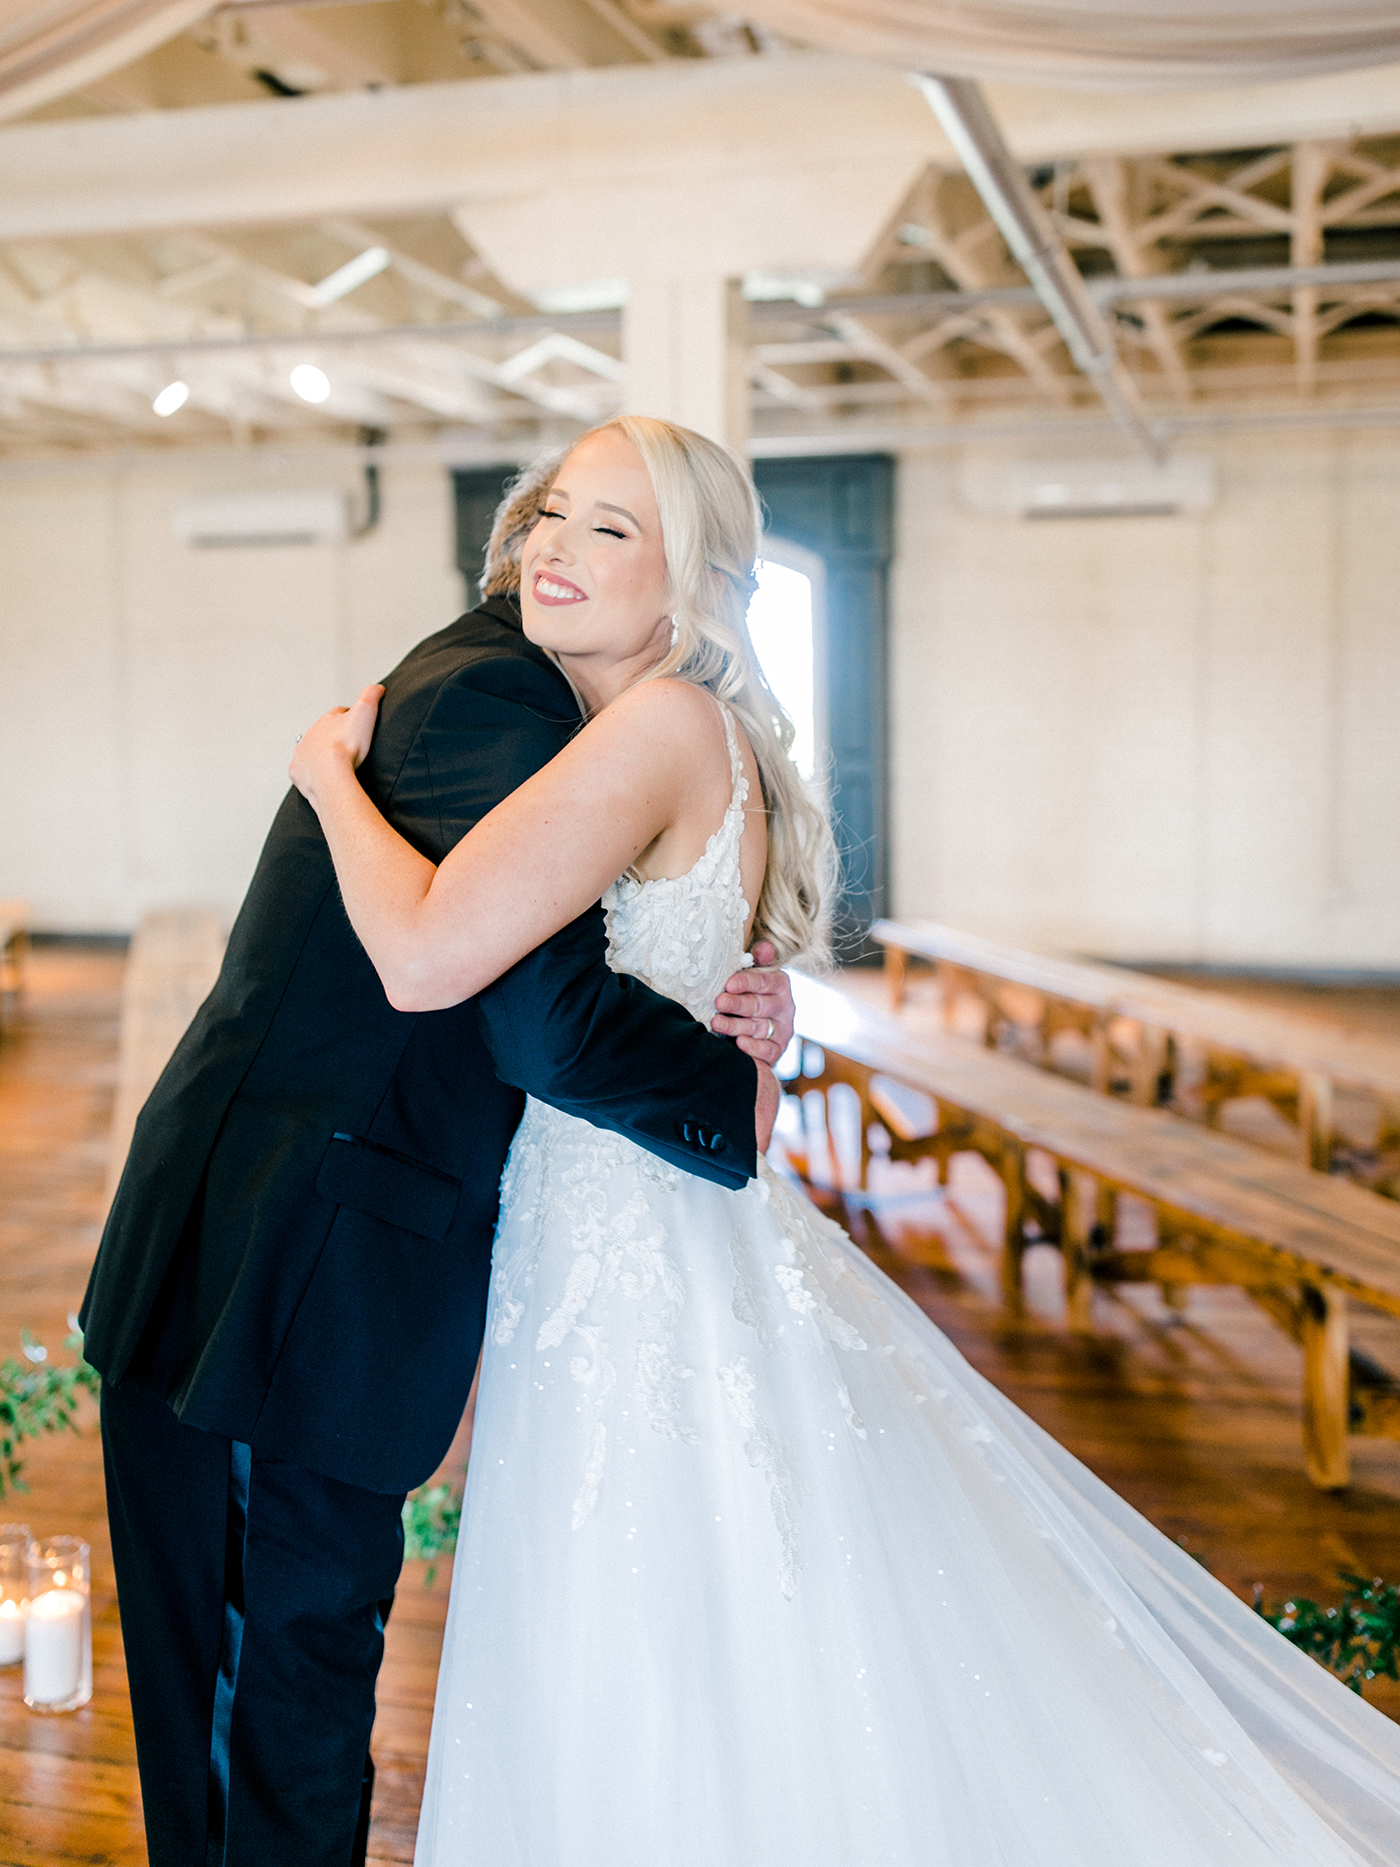 DFW Wedding at BRIK | A Stylish Soiree, Wedding Planner + Florist